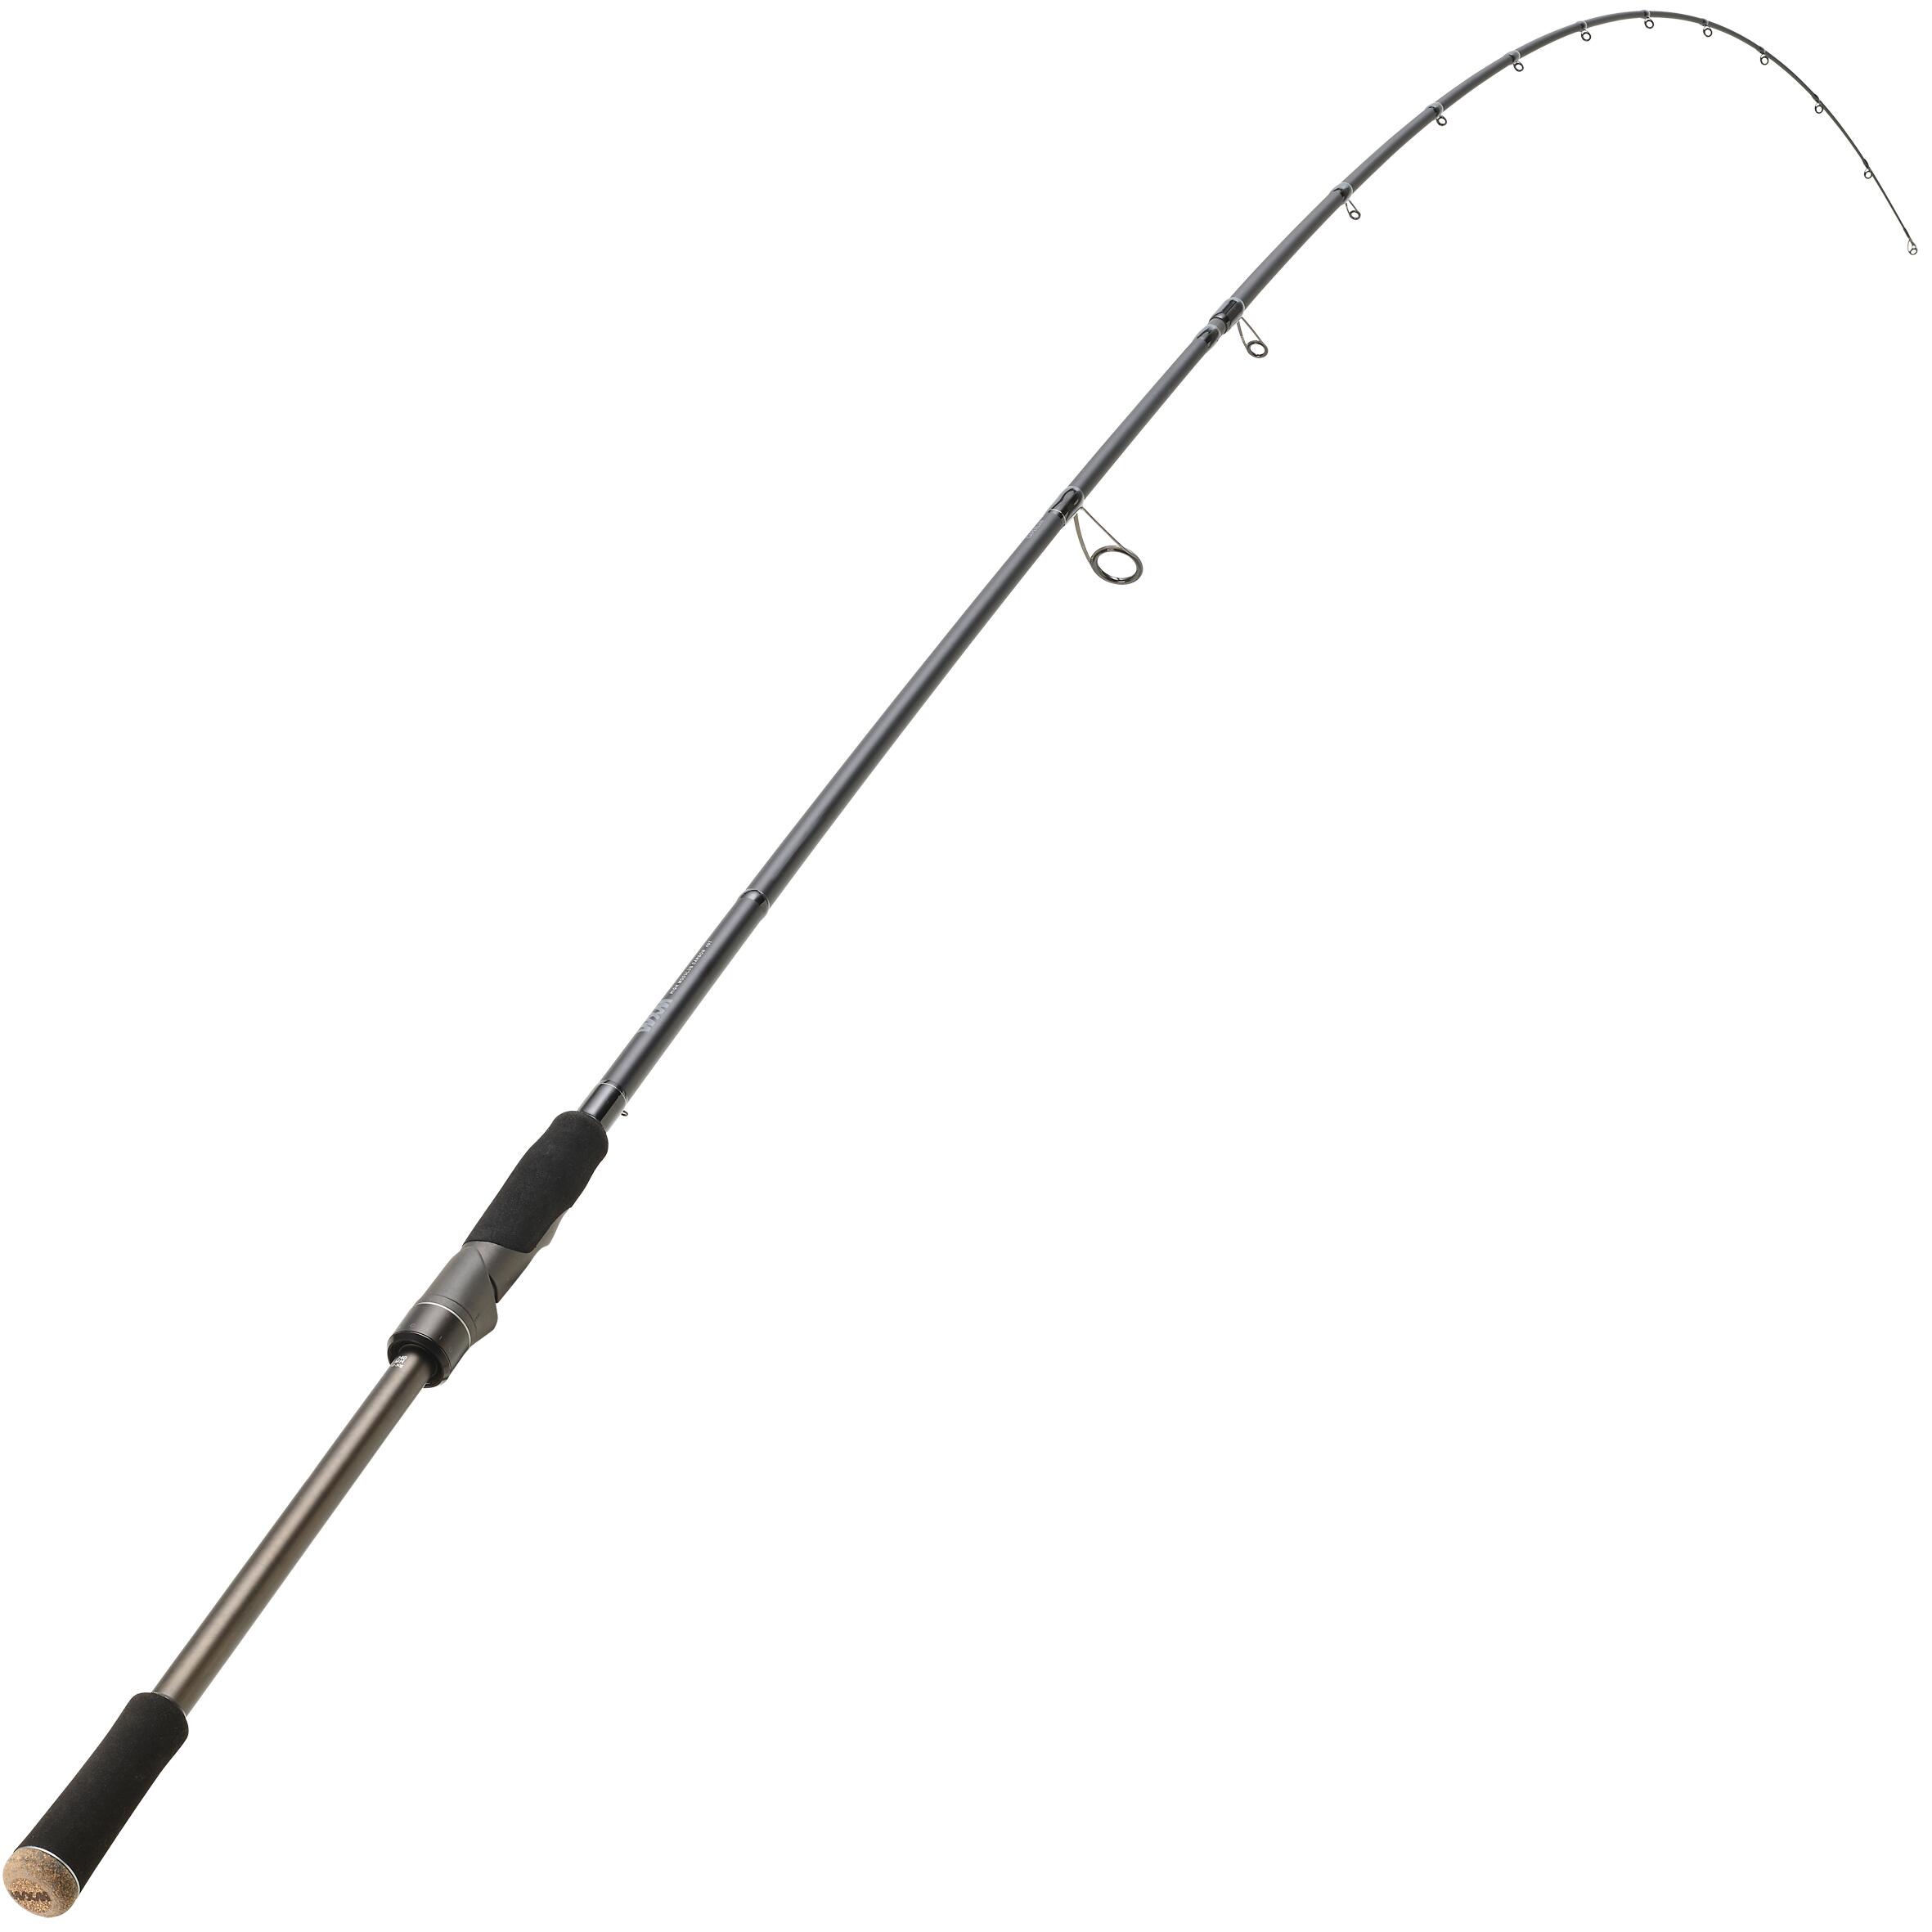 LURE FISHING ROD WXM-9 240MH 2/11